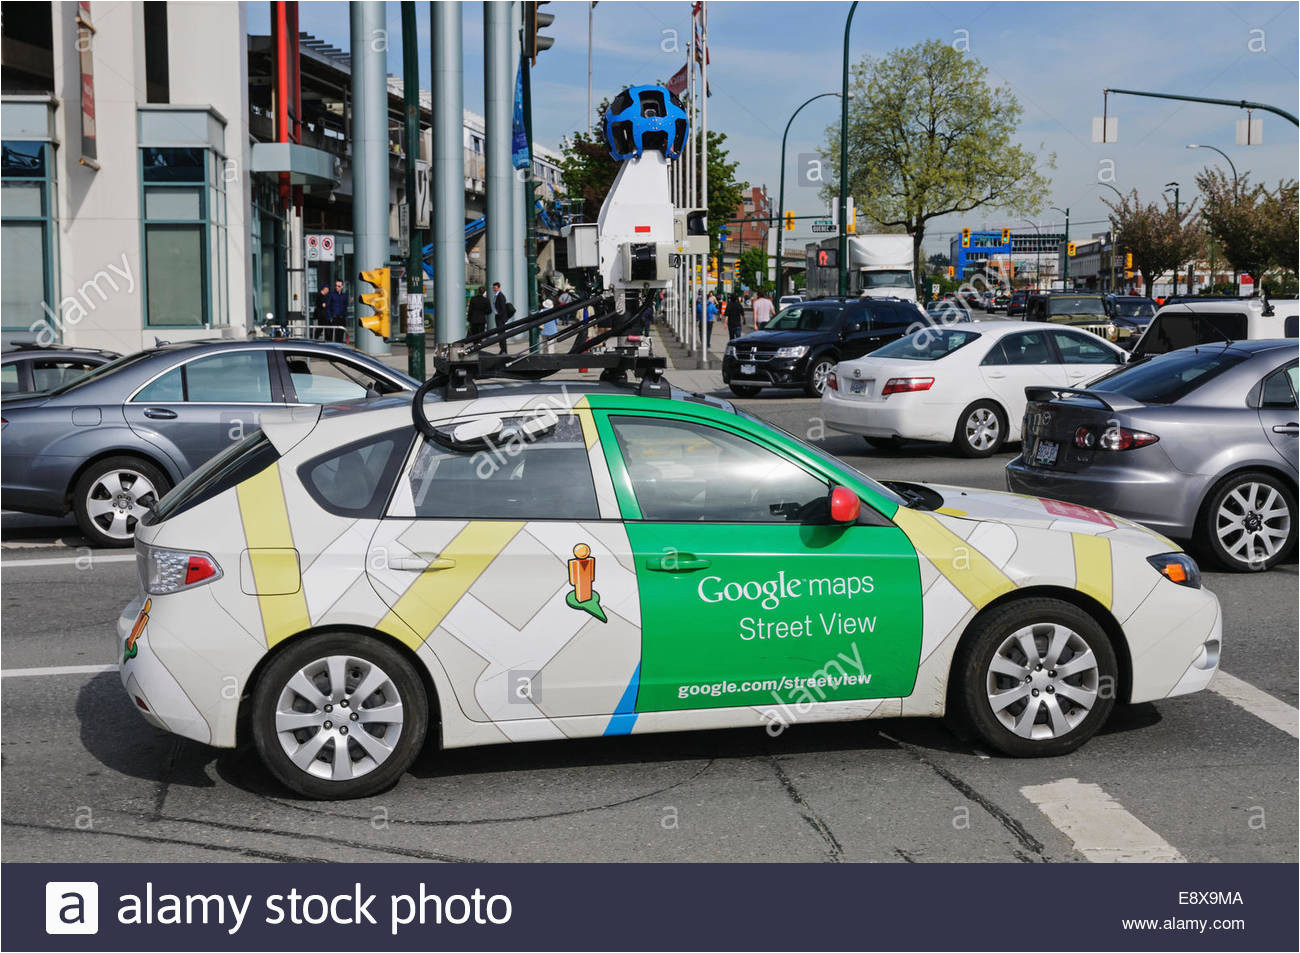 google maps and car stock photos google maps and car stock images